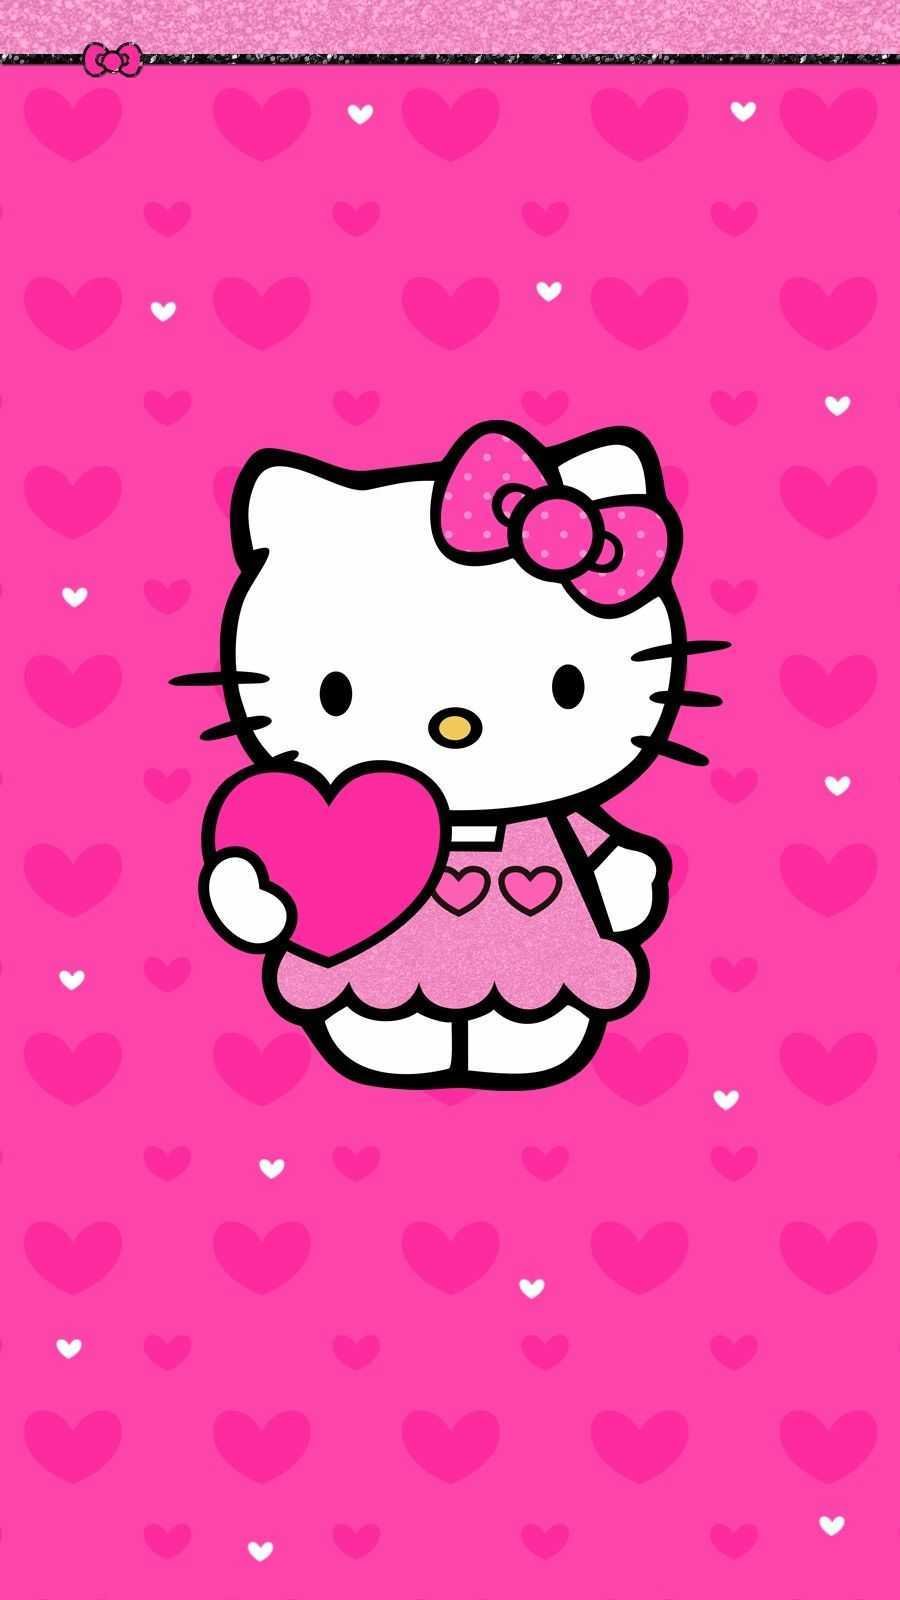 Download We Love Cute Black Hello Kitty Wallpaper